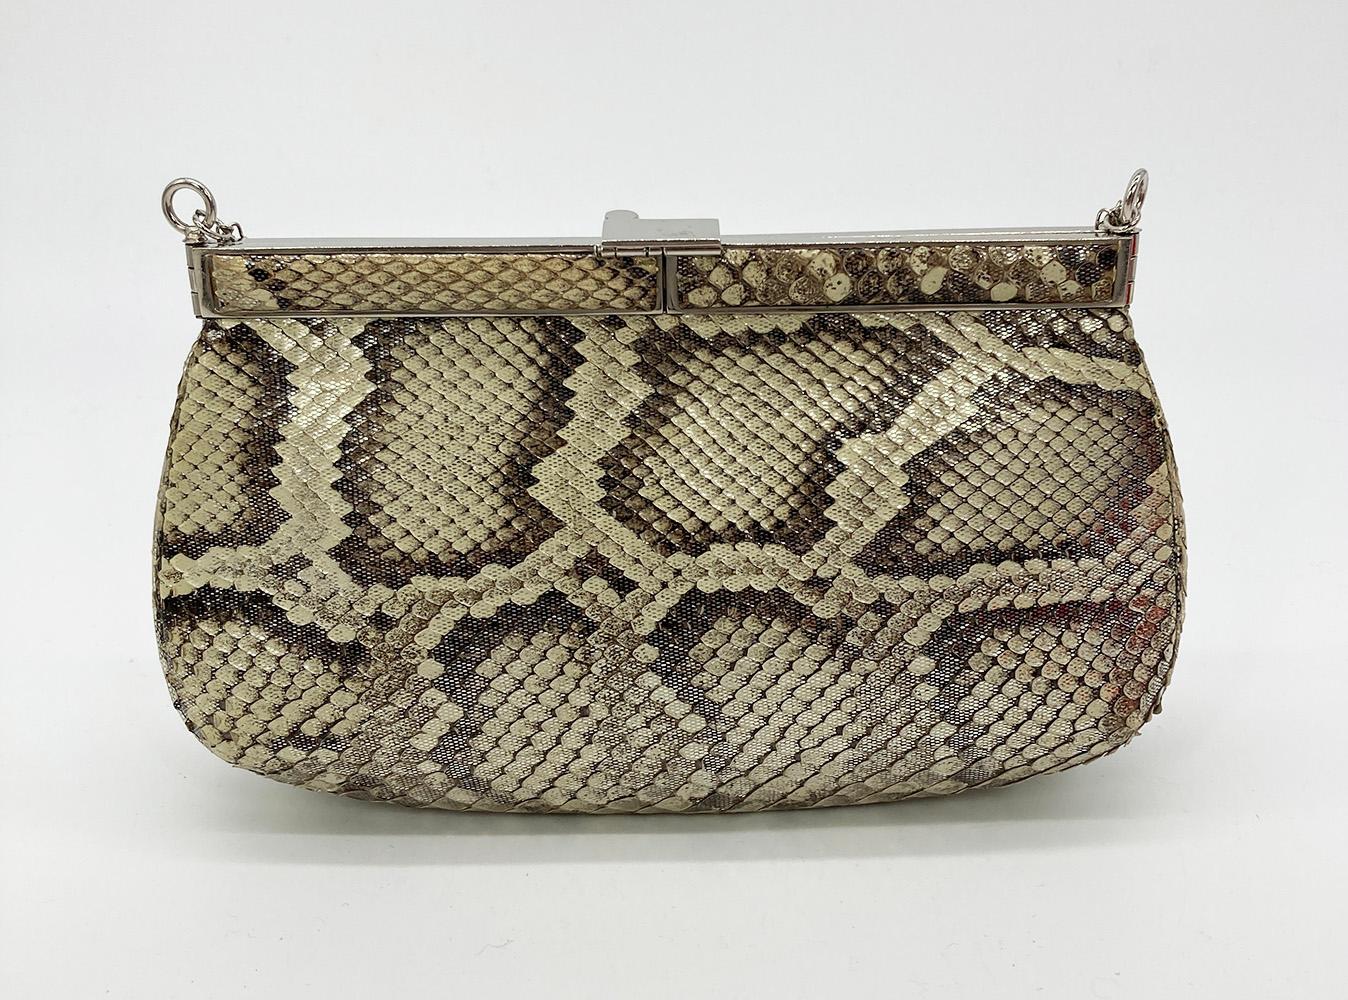 Judith Leiber Metallic Snakeskin Shoulder Bag In Good Condition For Sale In Philadelphia, PA